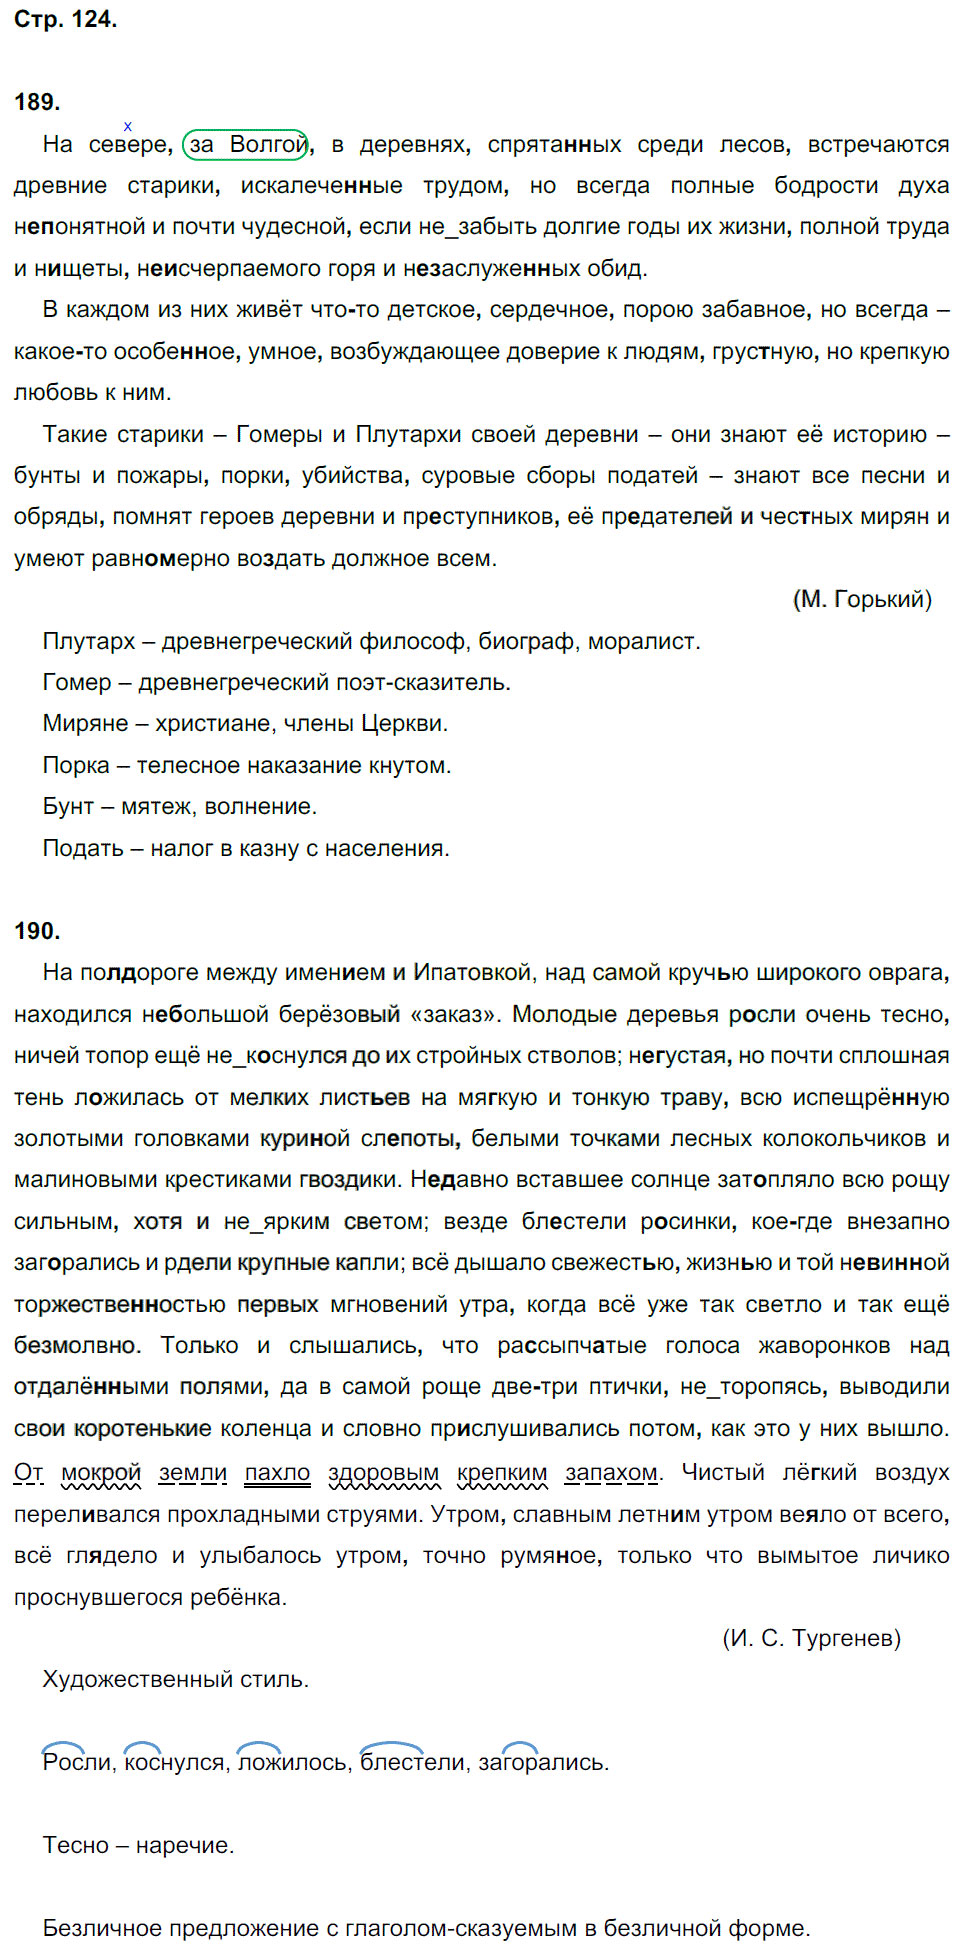 гдз 8 класс рабочая тетрадь страница 124 русский язык Кулаева